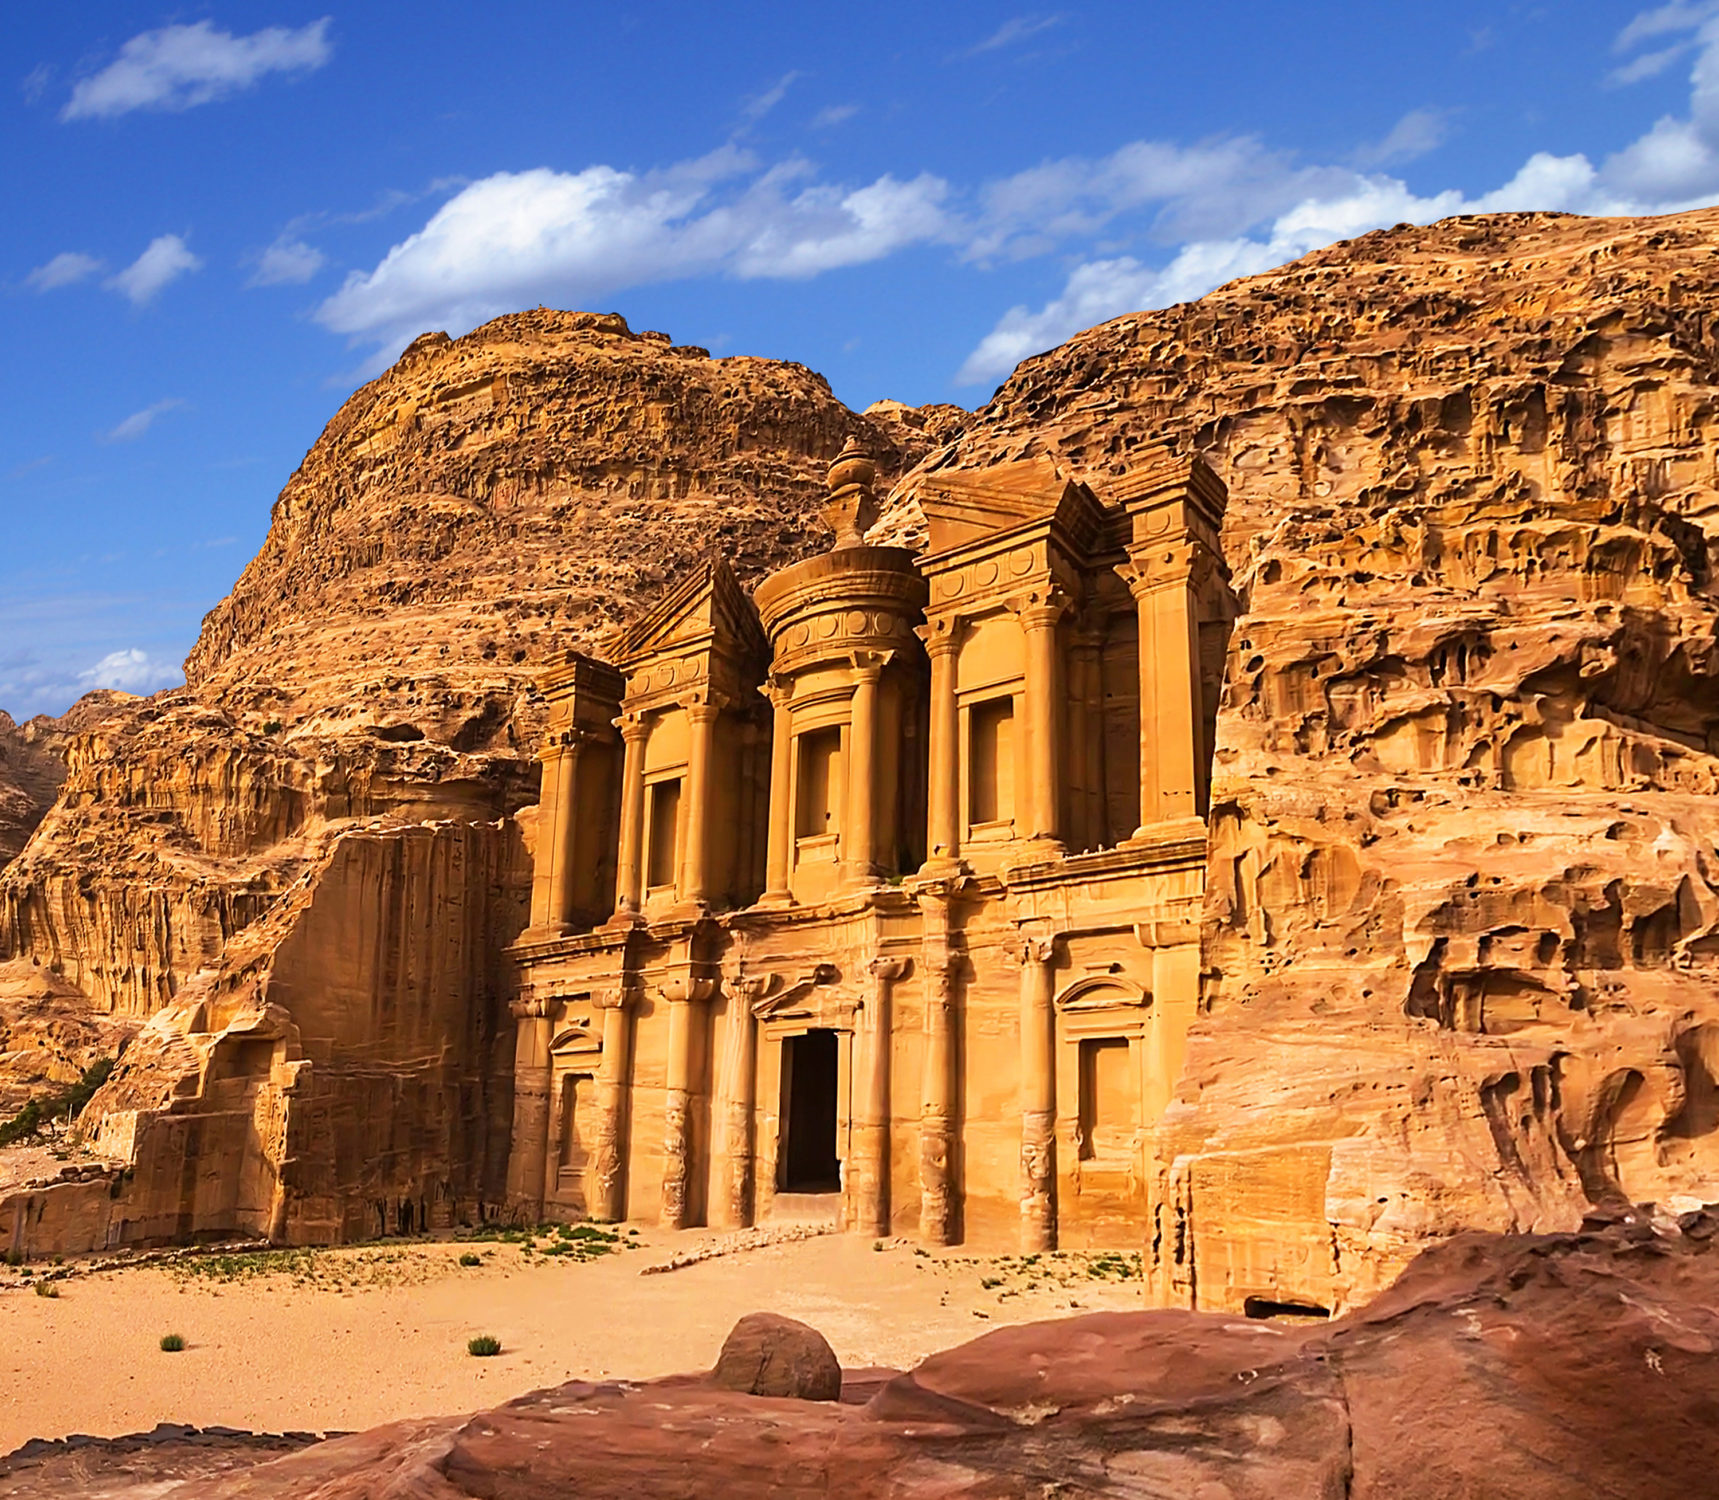 tourism in jordan essay